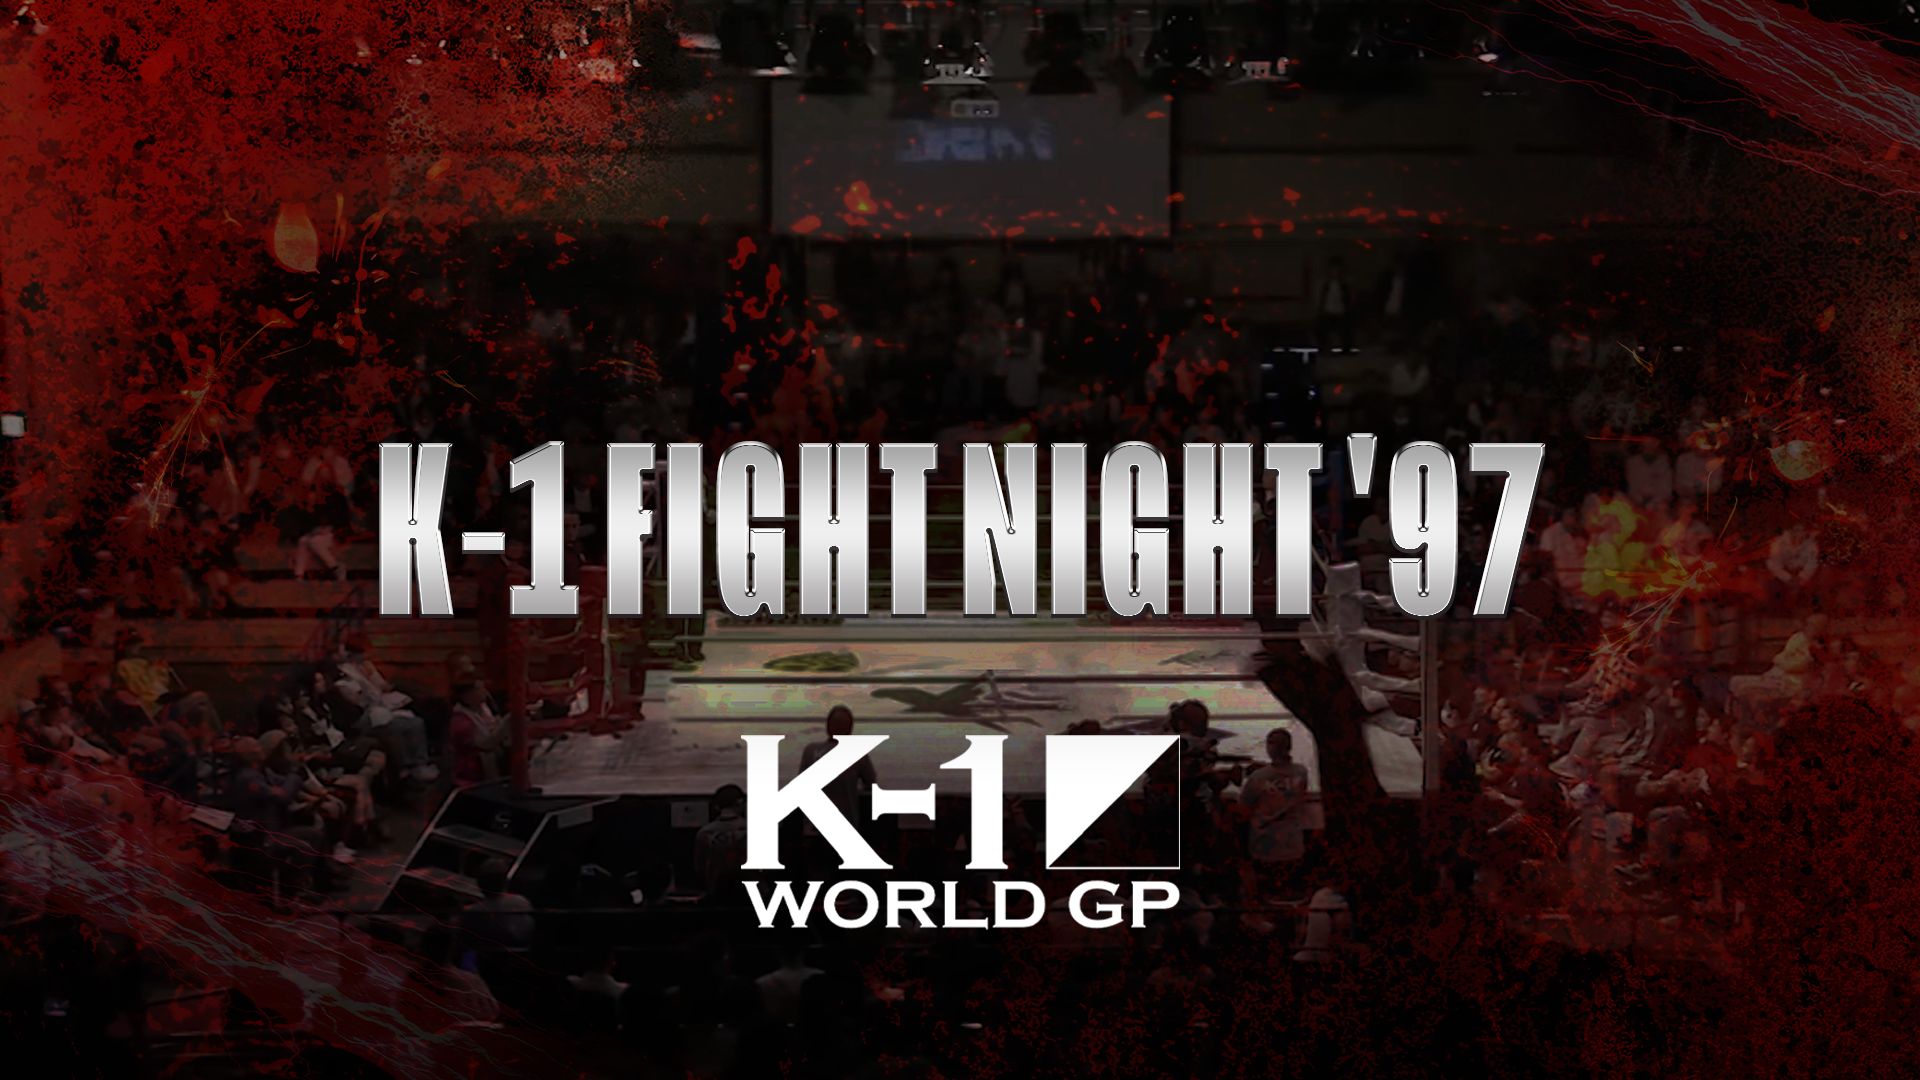 K-1 Fight Night '97